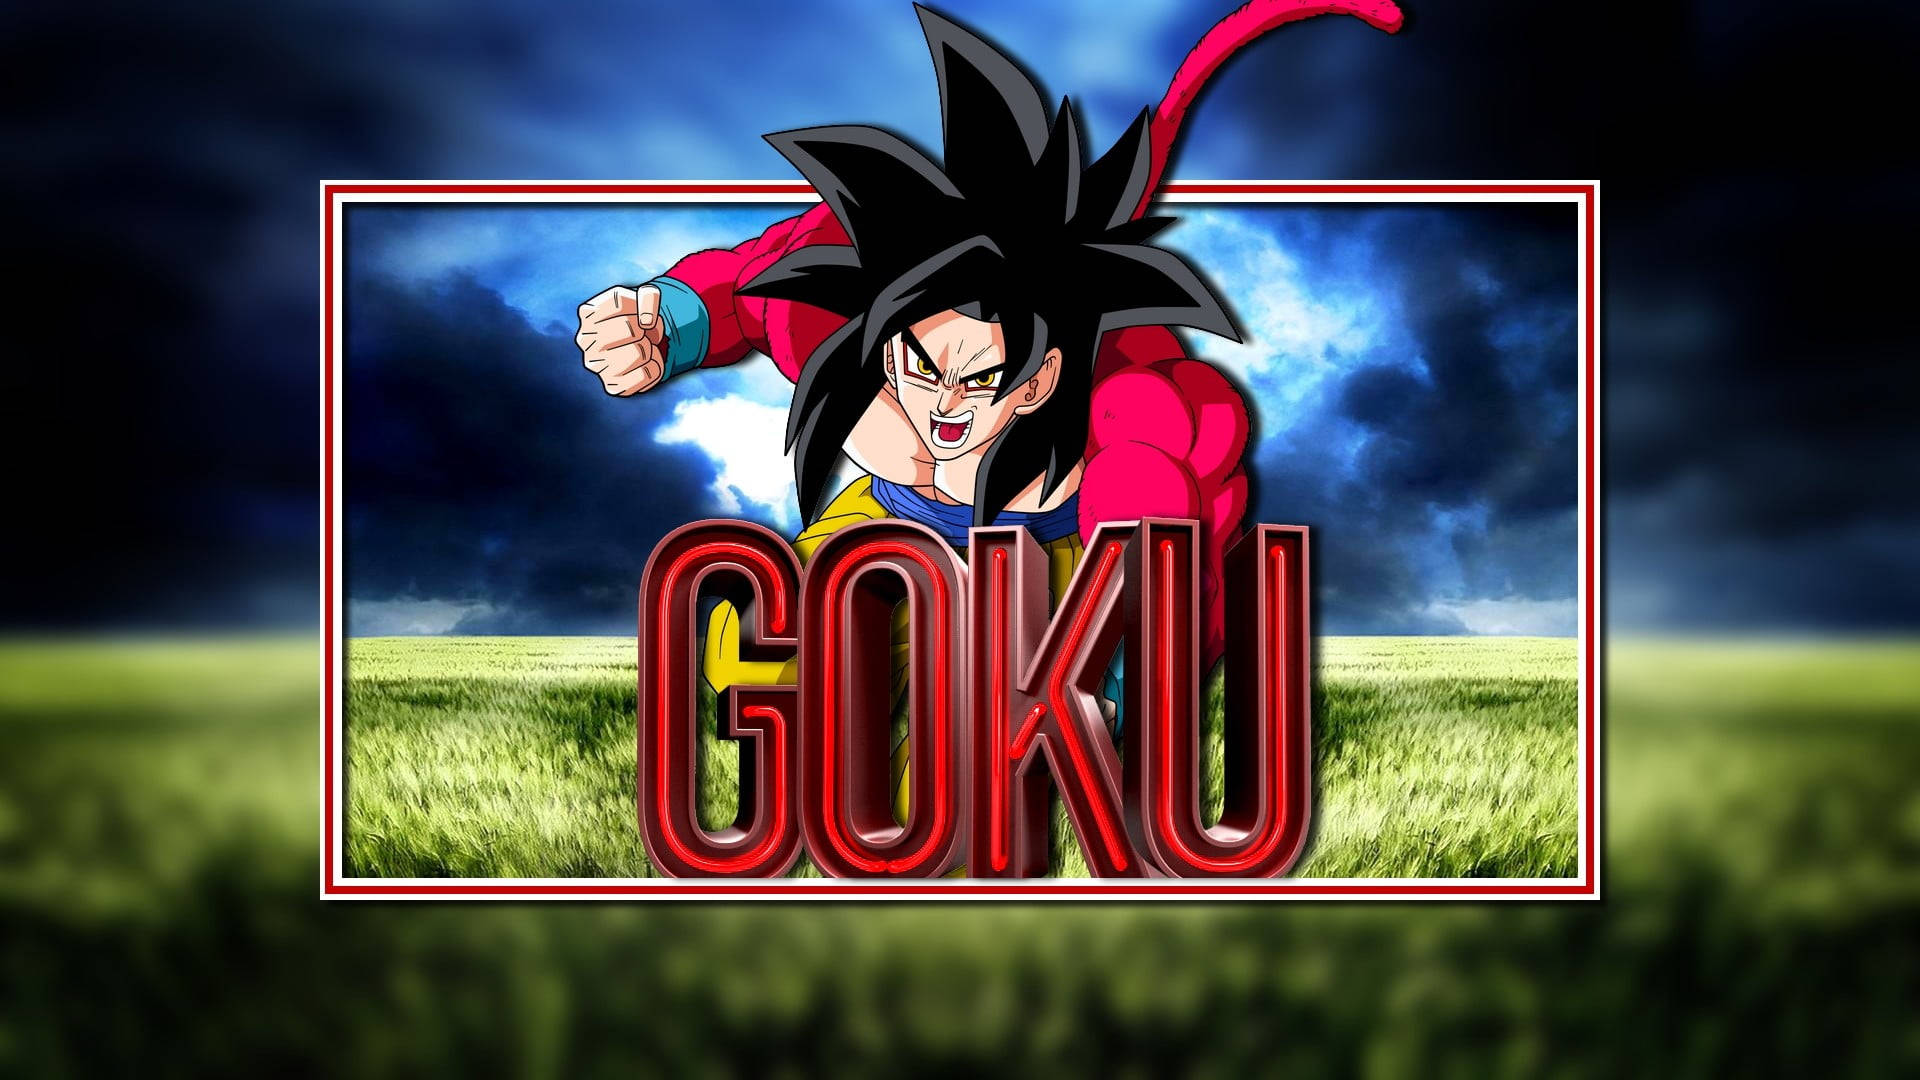 Free Ssj4 Goku Wallpaper Downloads, [100+] Ssj4 Goku Wallpapers for FREE |  